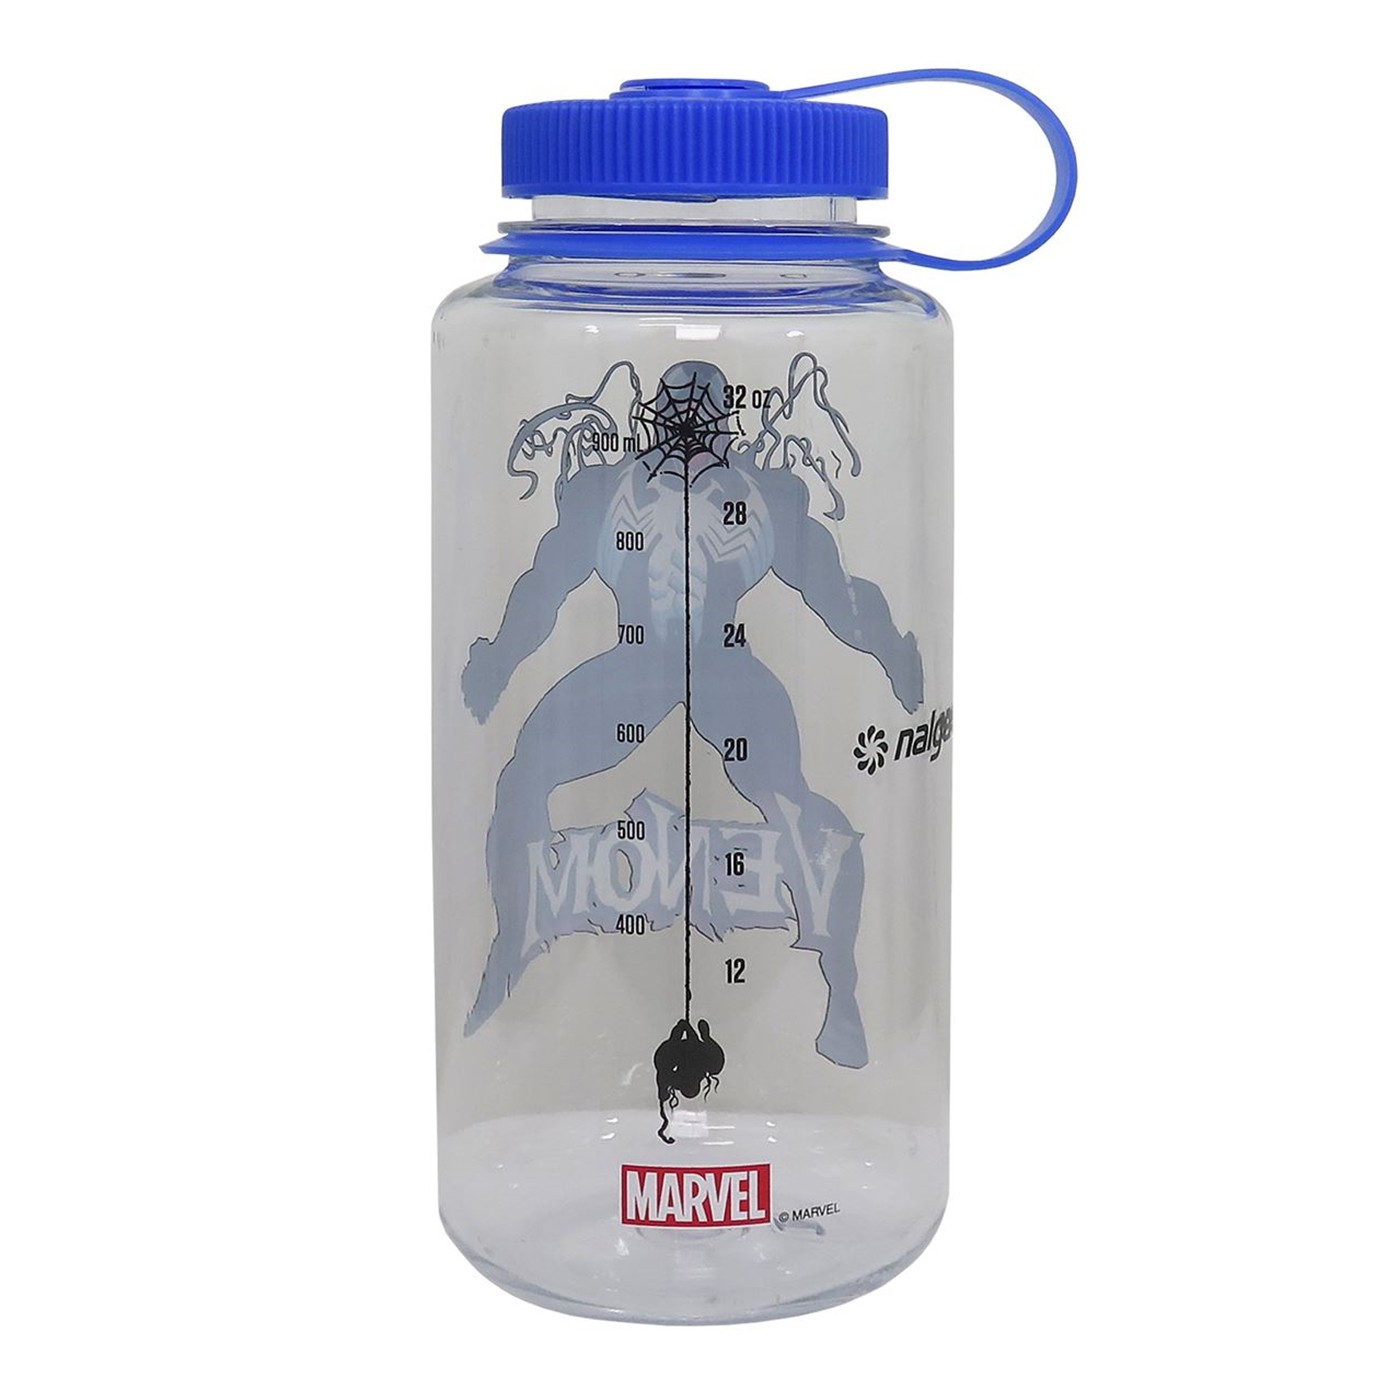 Venom Nalgene Tritan 32oz Water Bottle